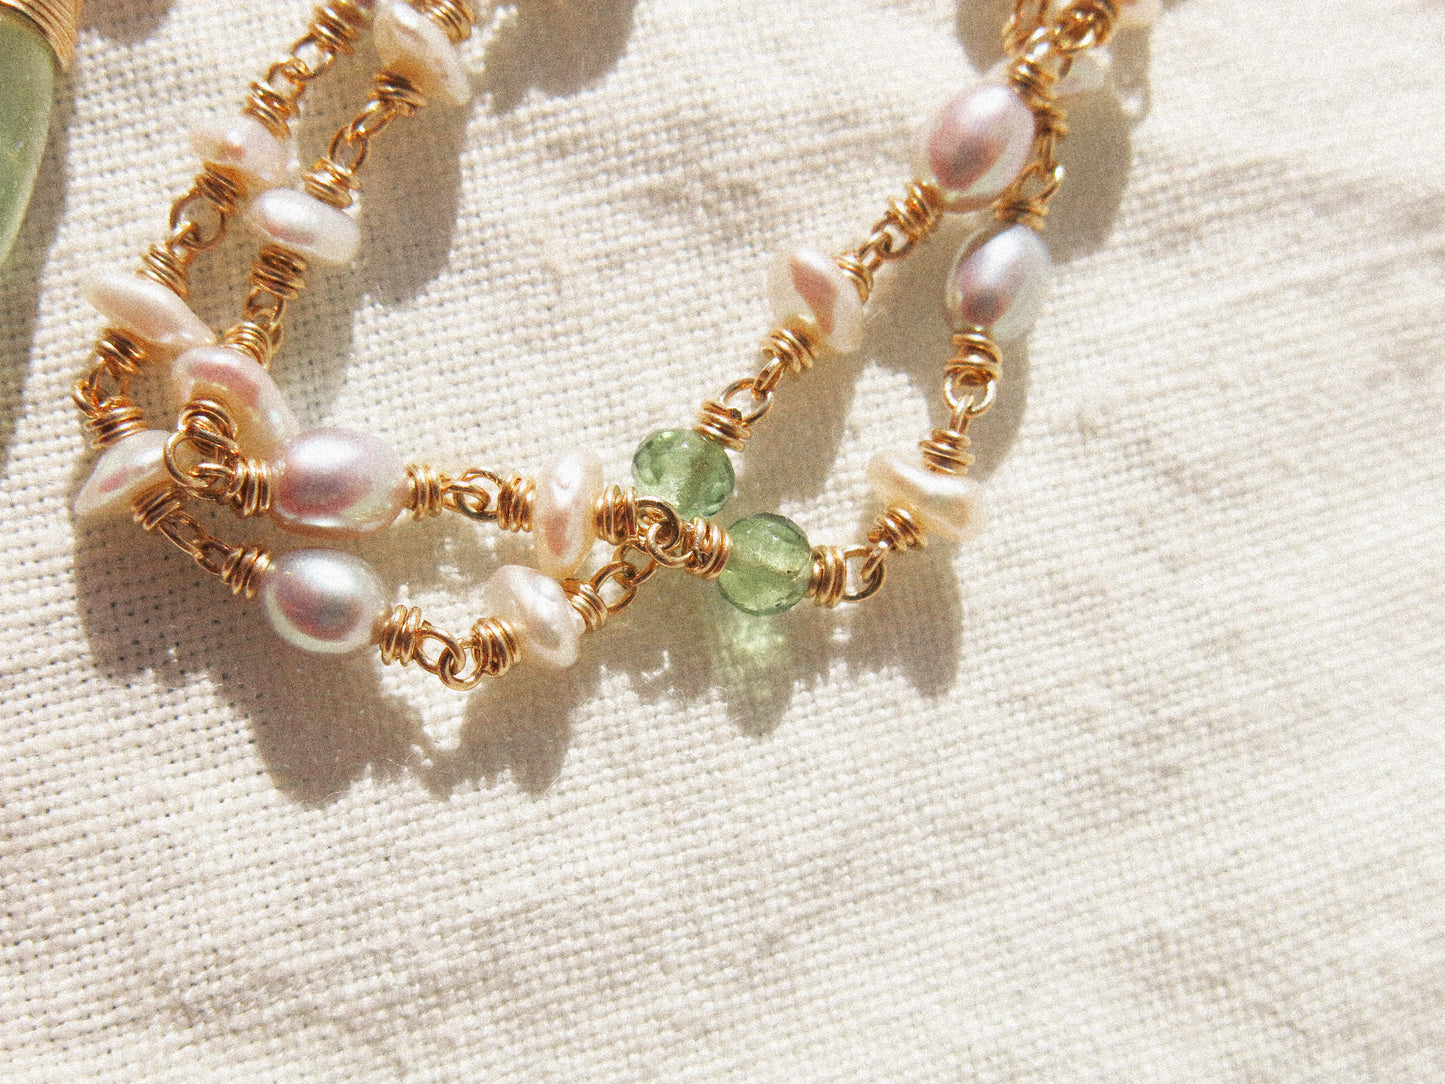 Multi-Gemstone 4-way Delicate Necklace with Prehnite, Pearl, Aquamarine, and Zircon